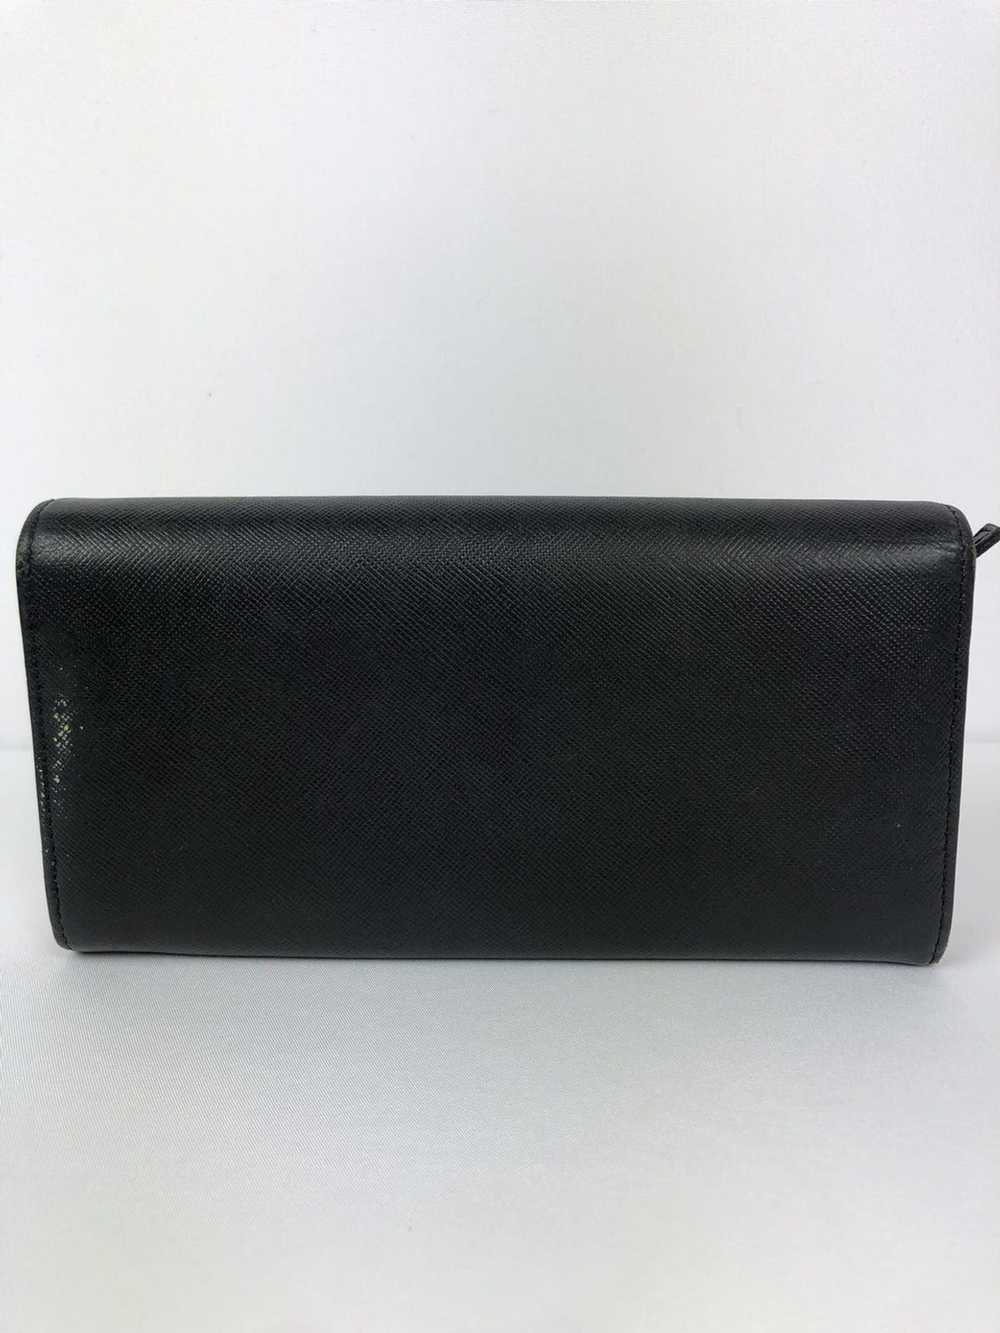 Vivienne Westwood Orb leather long wallet - image 2